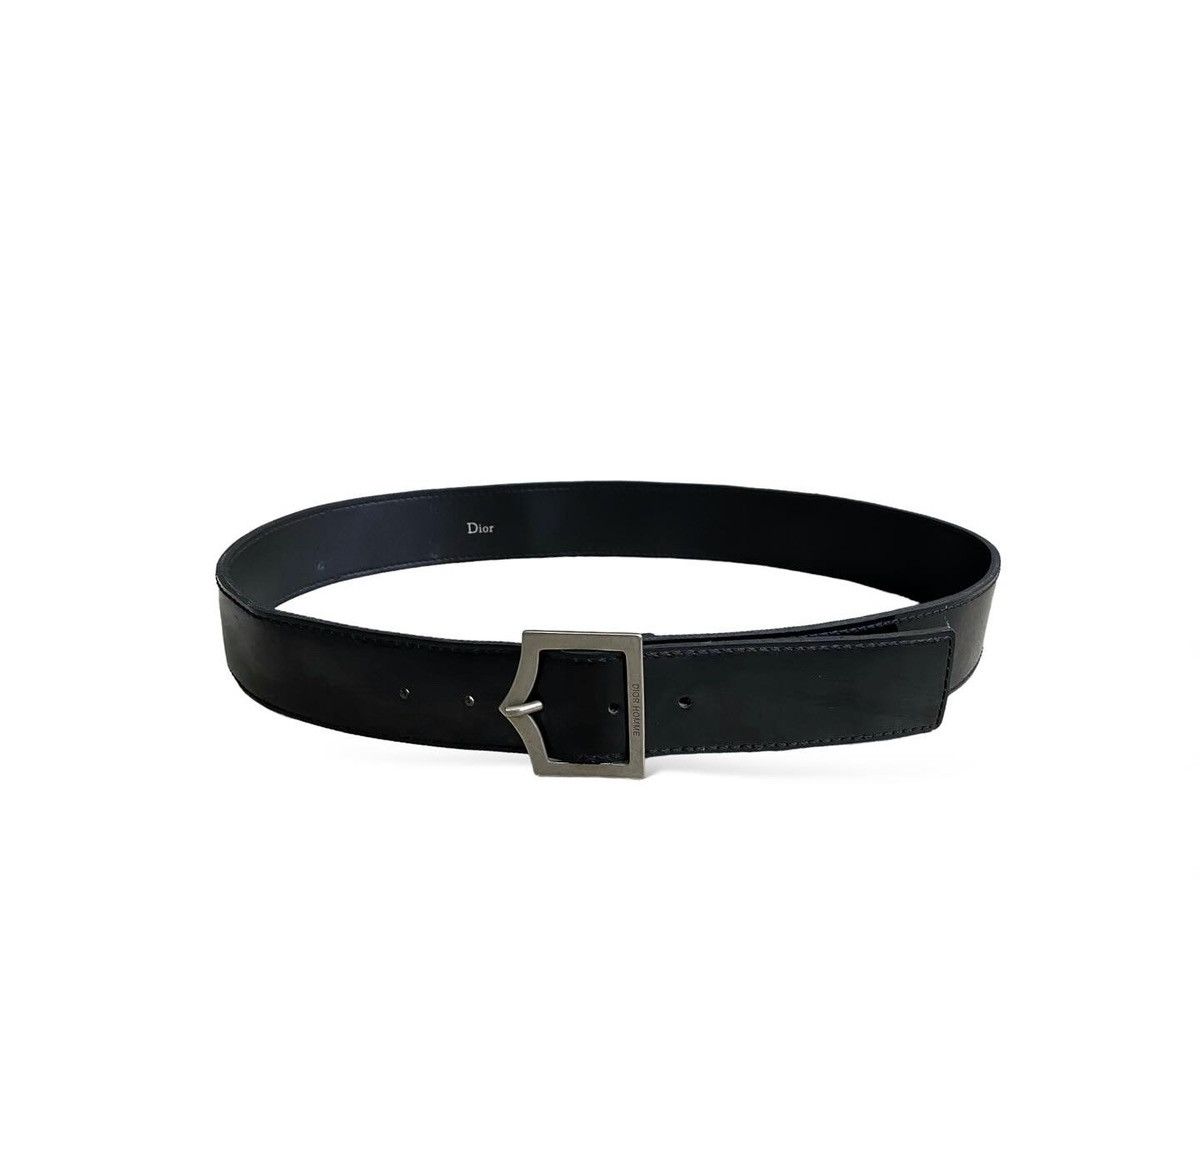 Dior DIOR Homme D-Point patent leather belt black by hedi slimane | Grailed